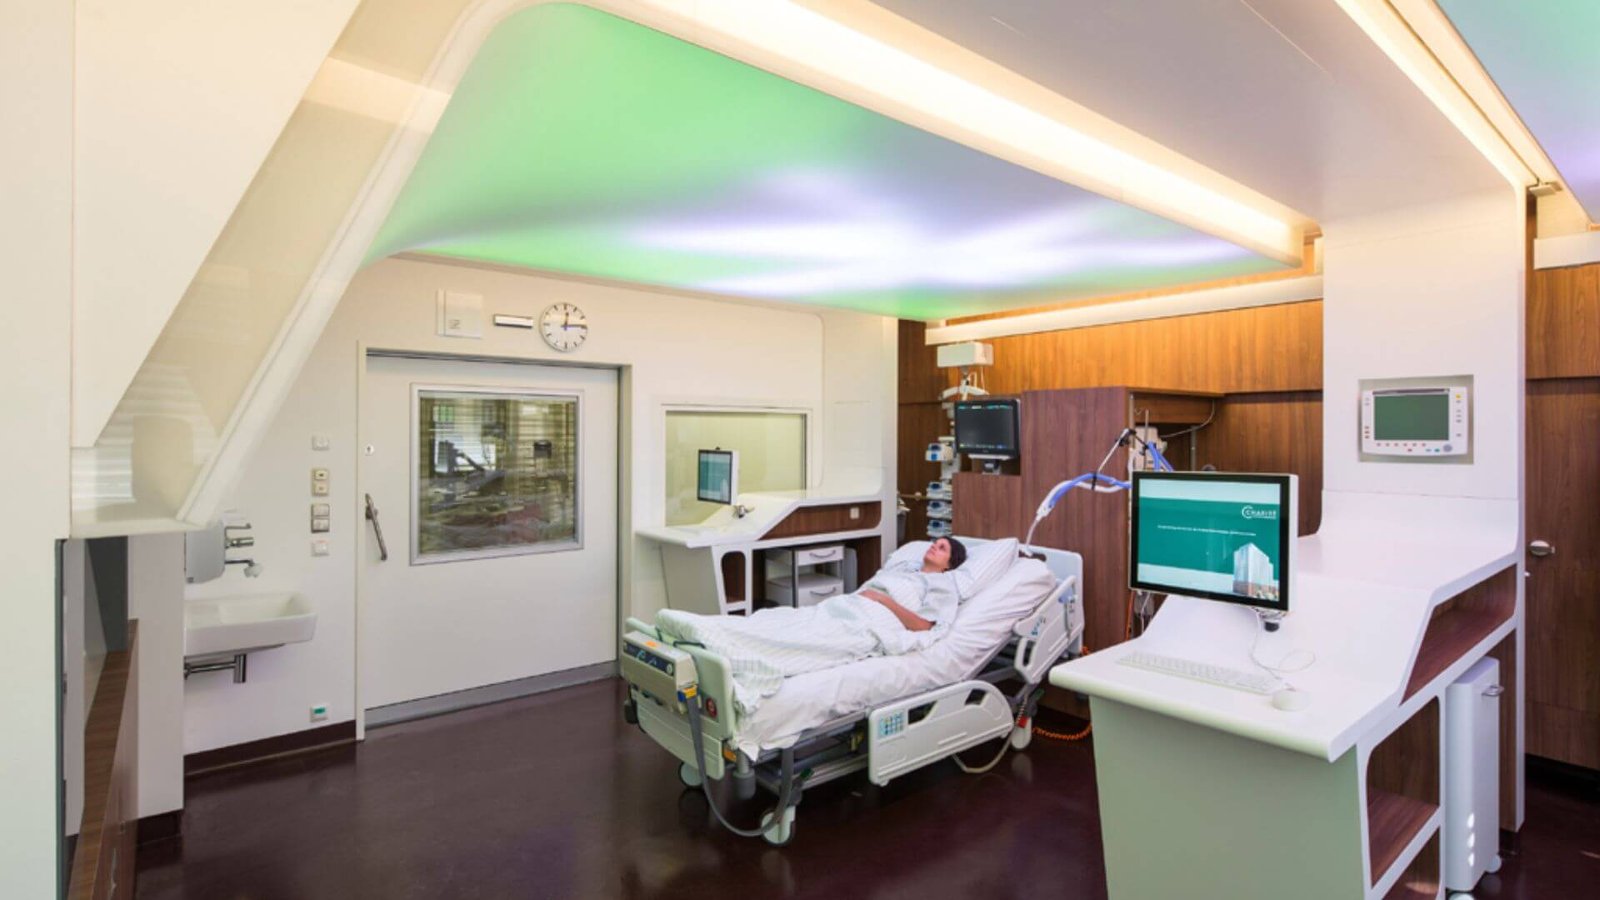 Integrating Hospital Lighting with Healthcare Technologies